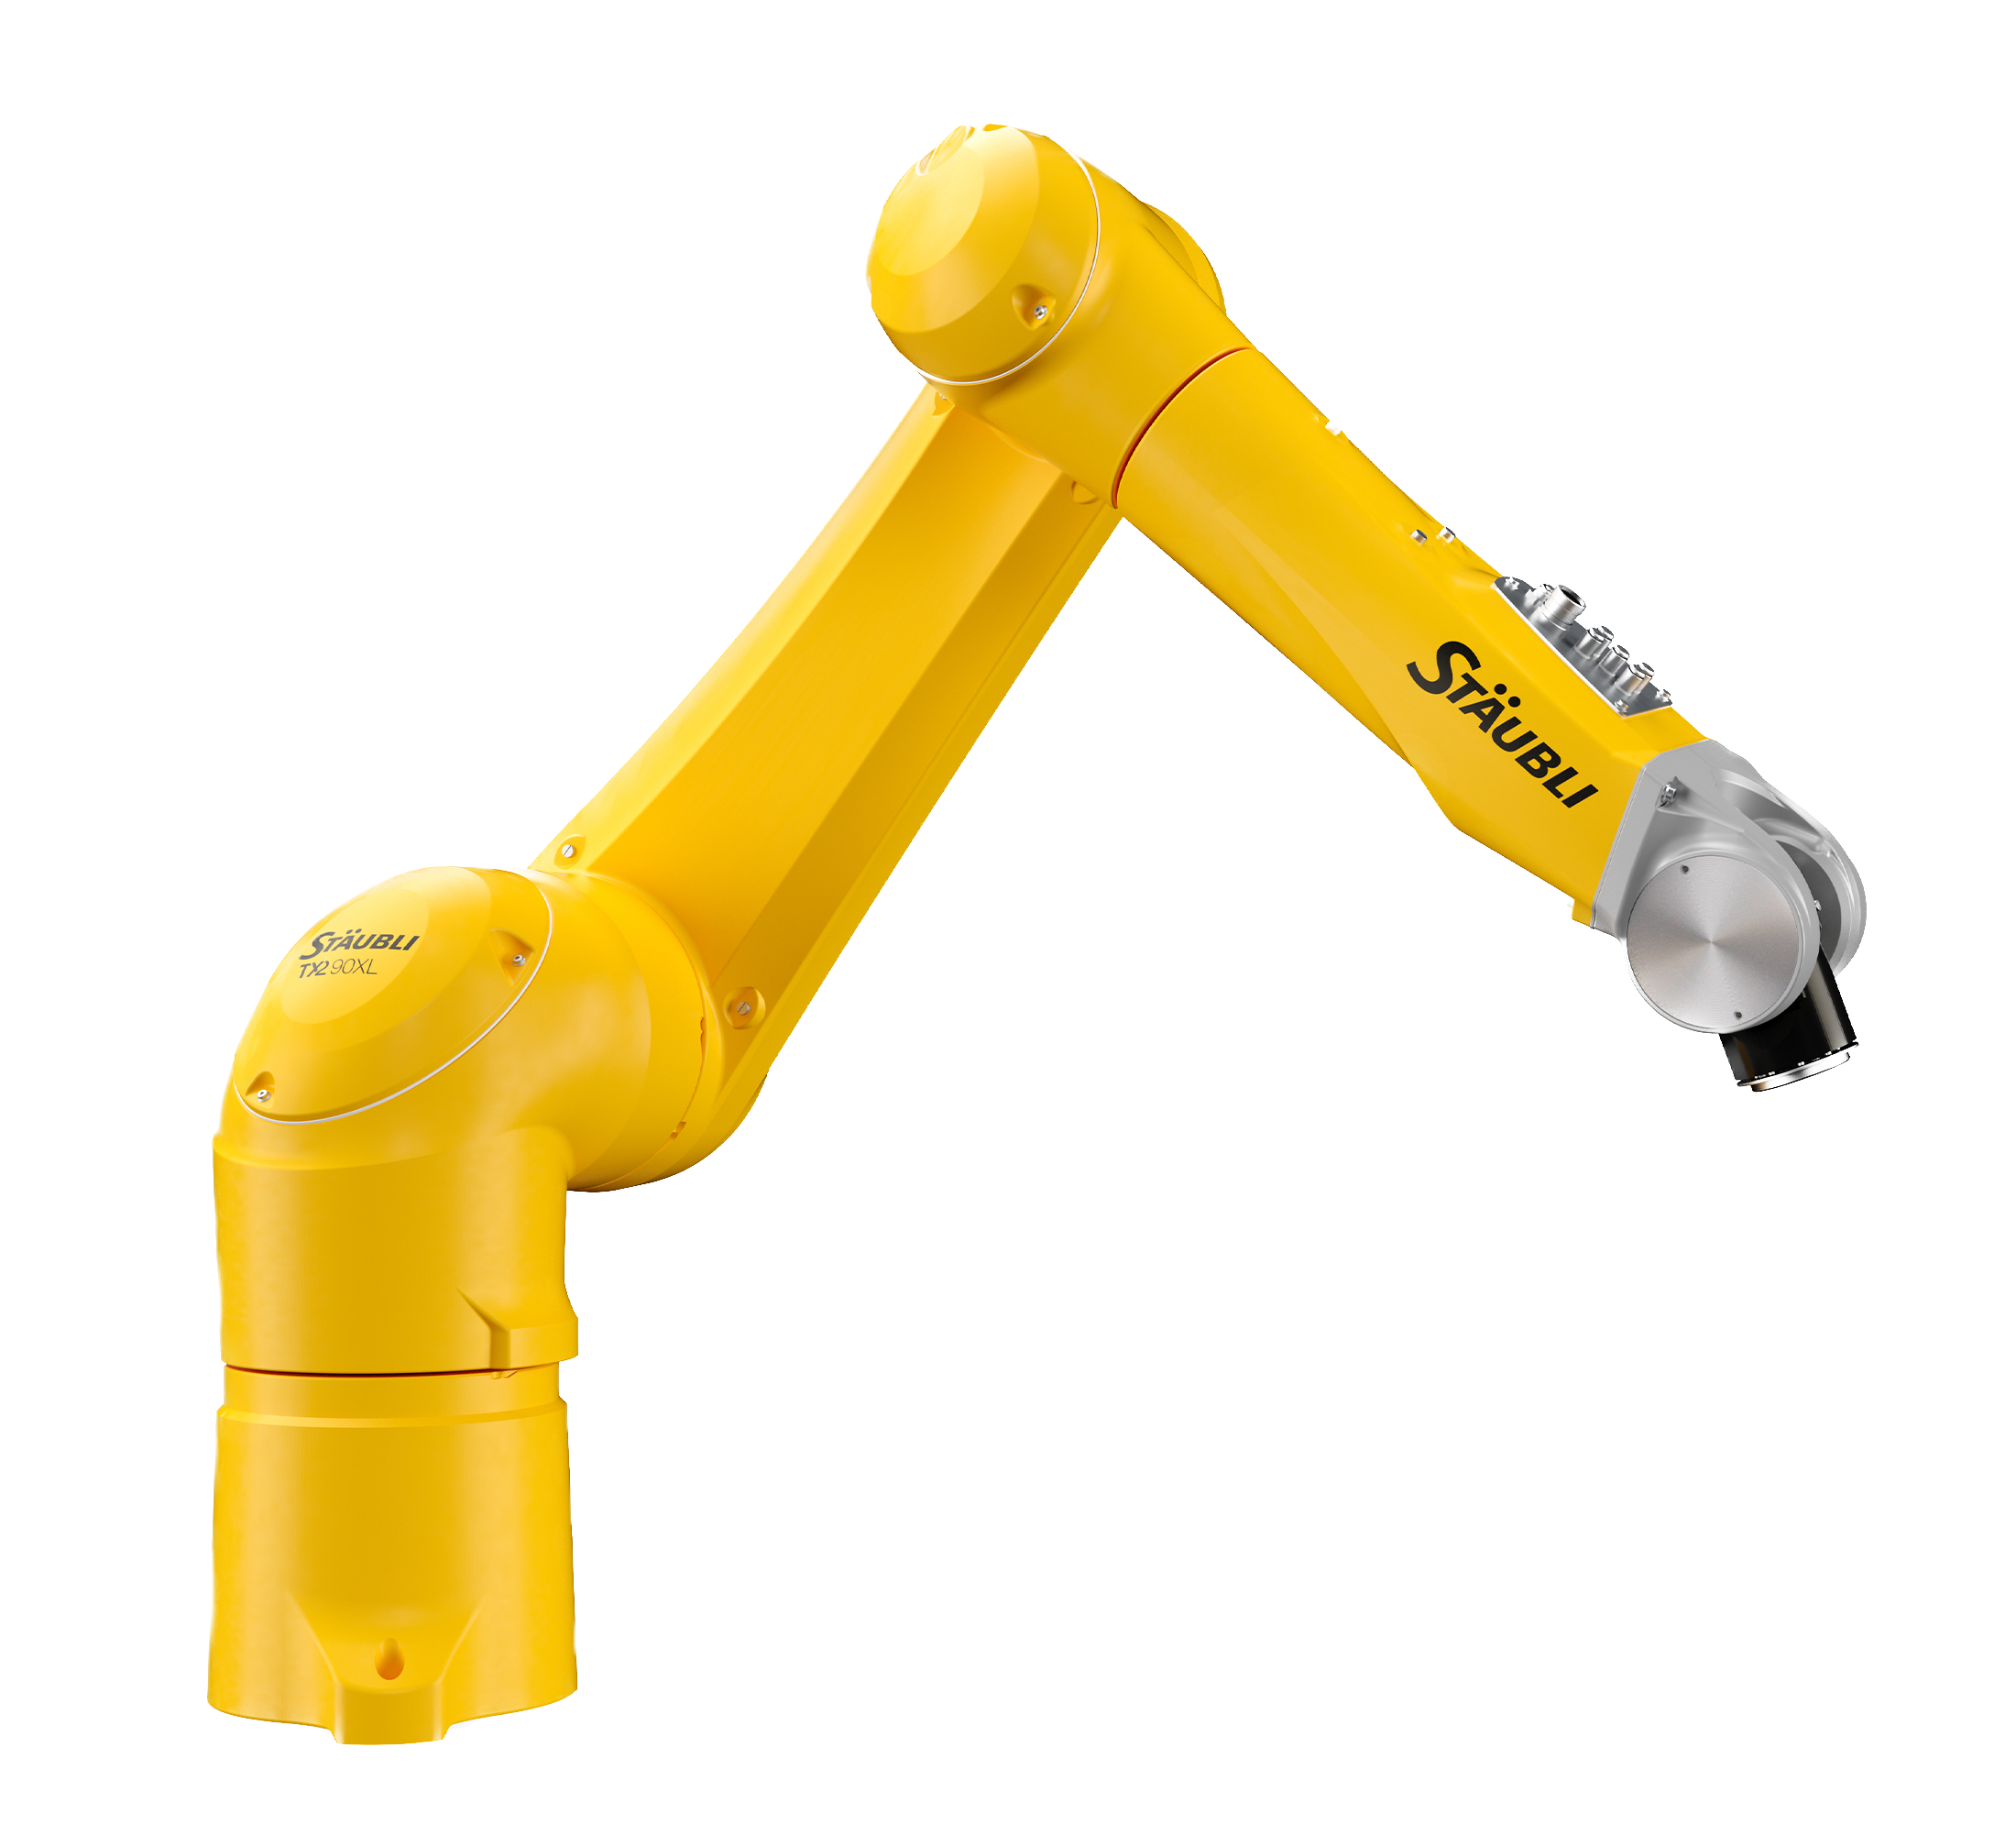 Industrial Robot Staubli TX2-90XL